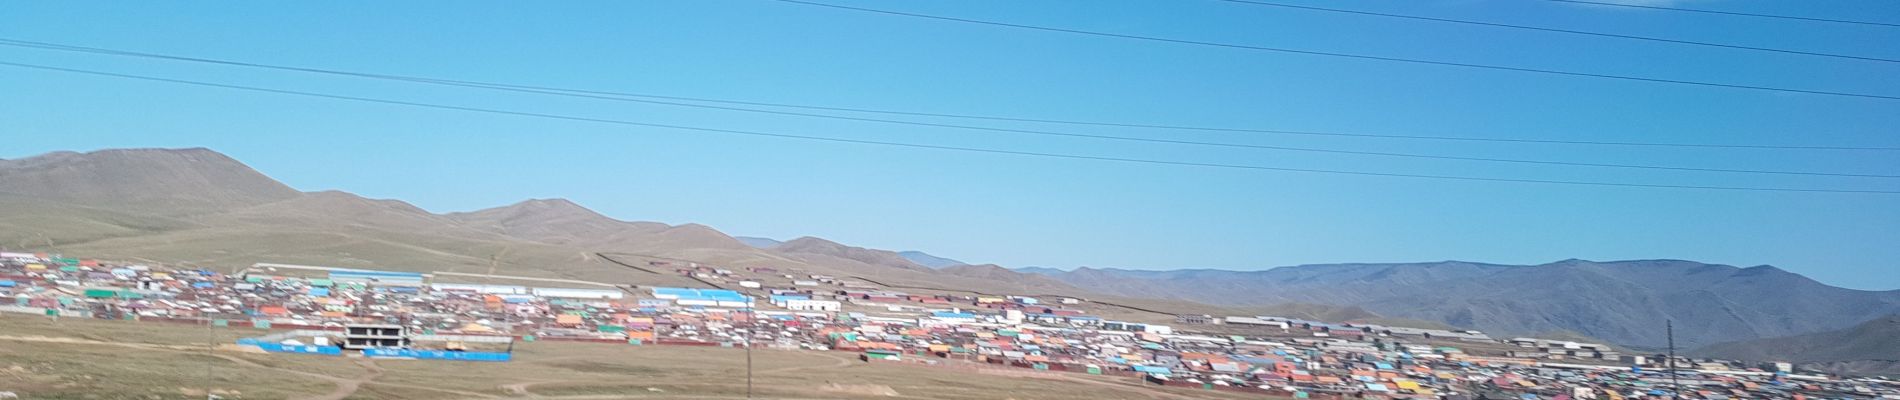 Tour Auto Unknown - Mongolie111 - Photo